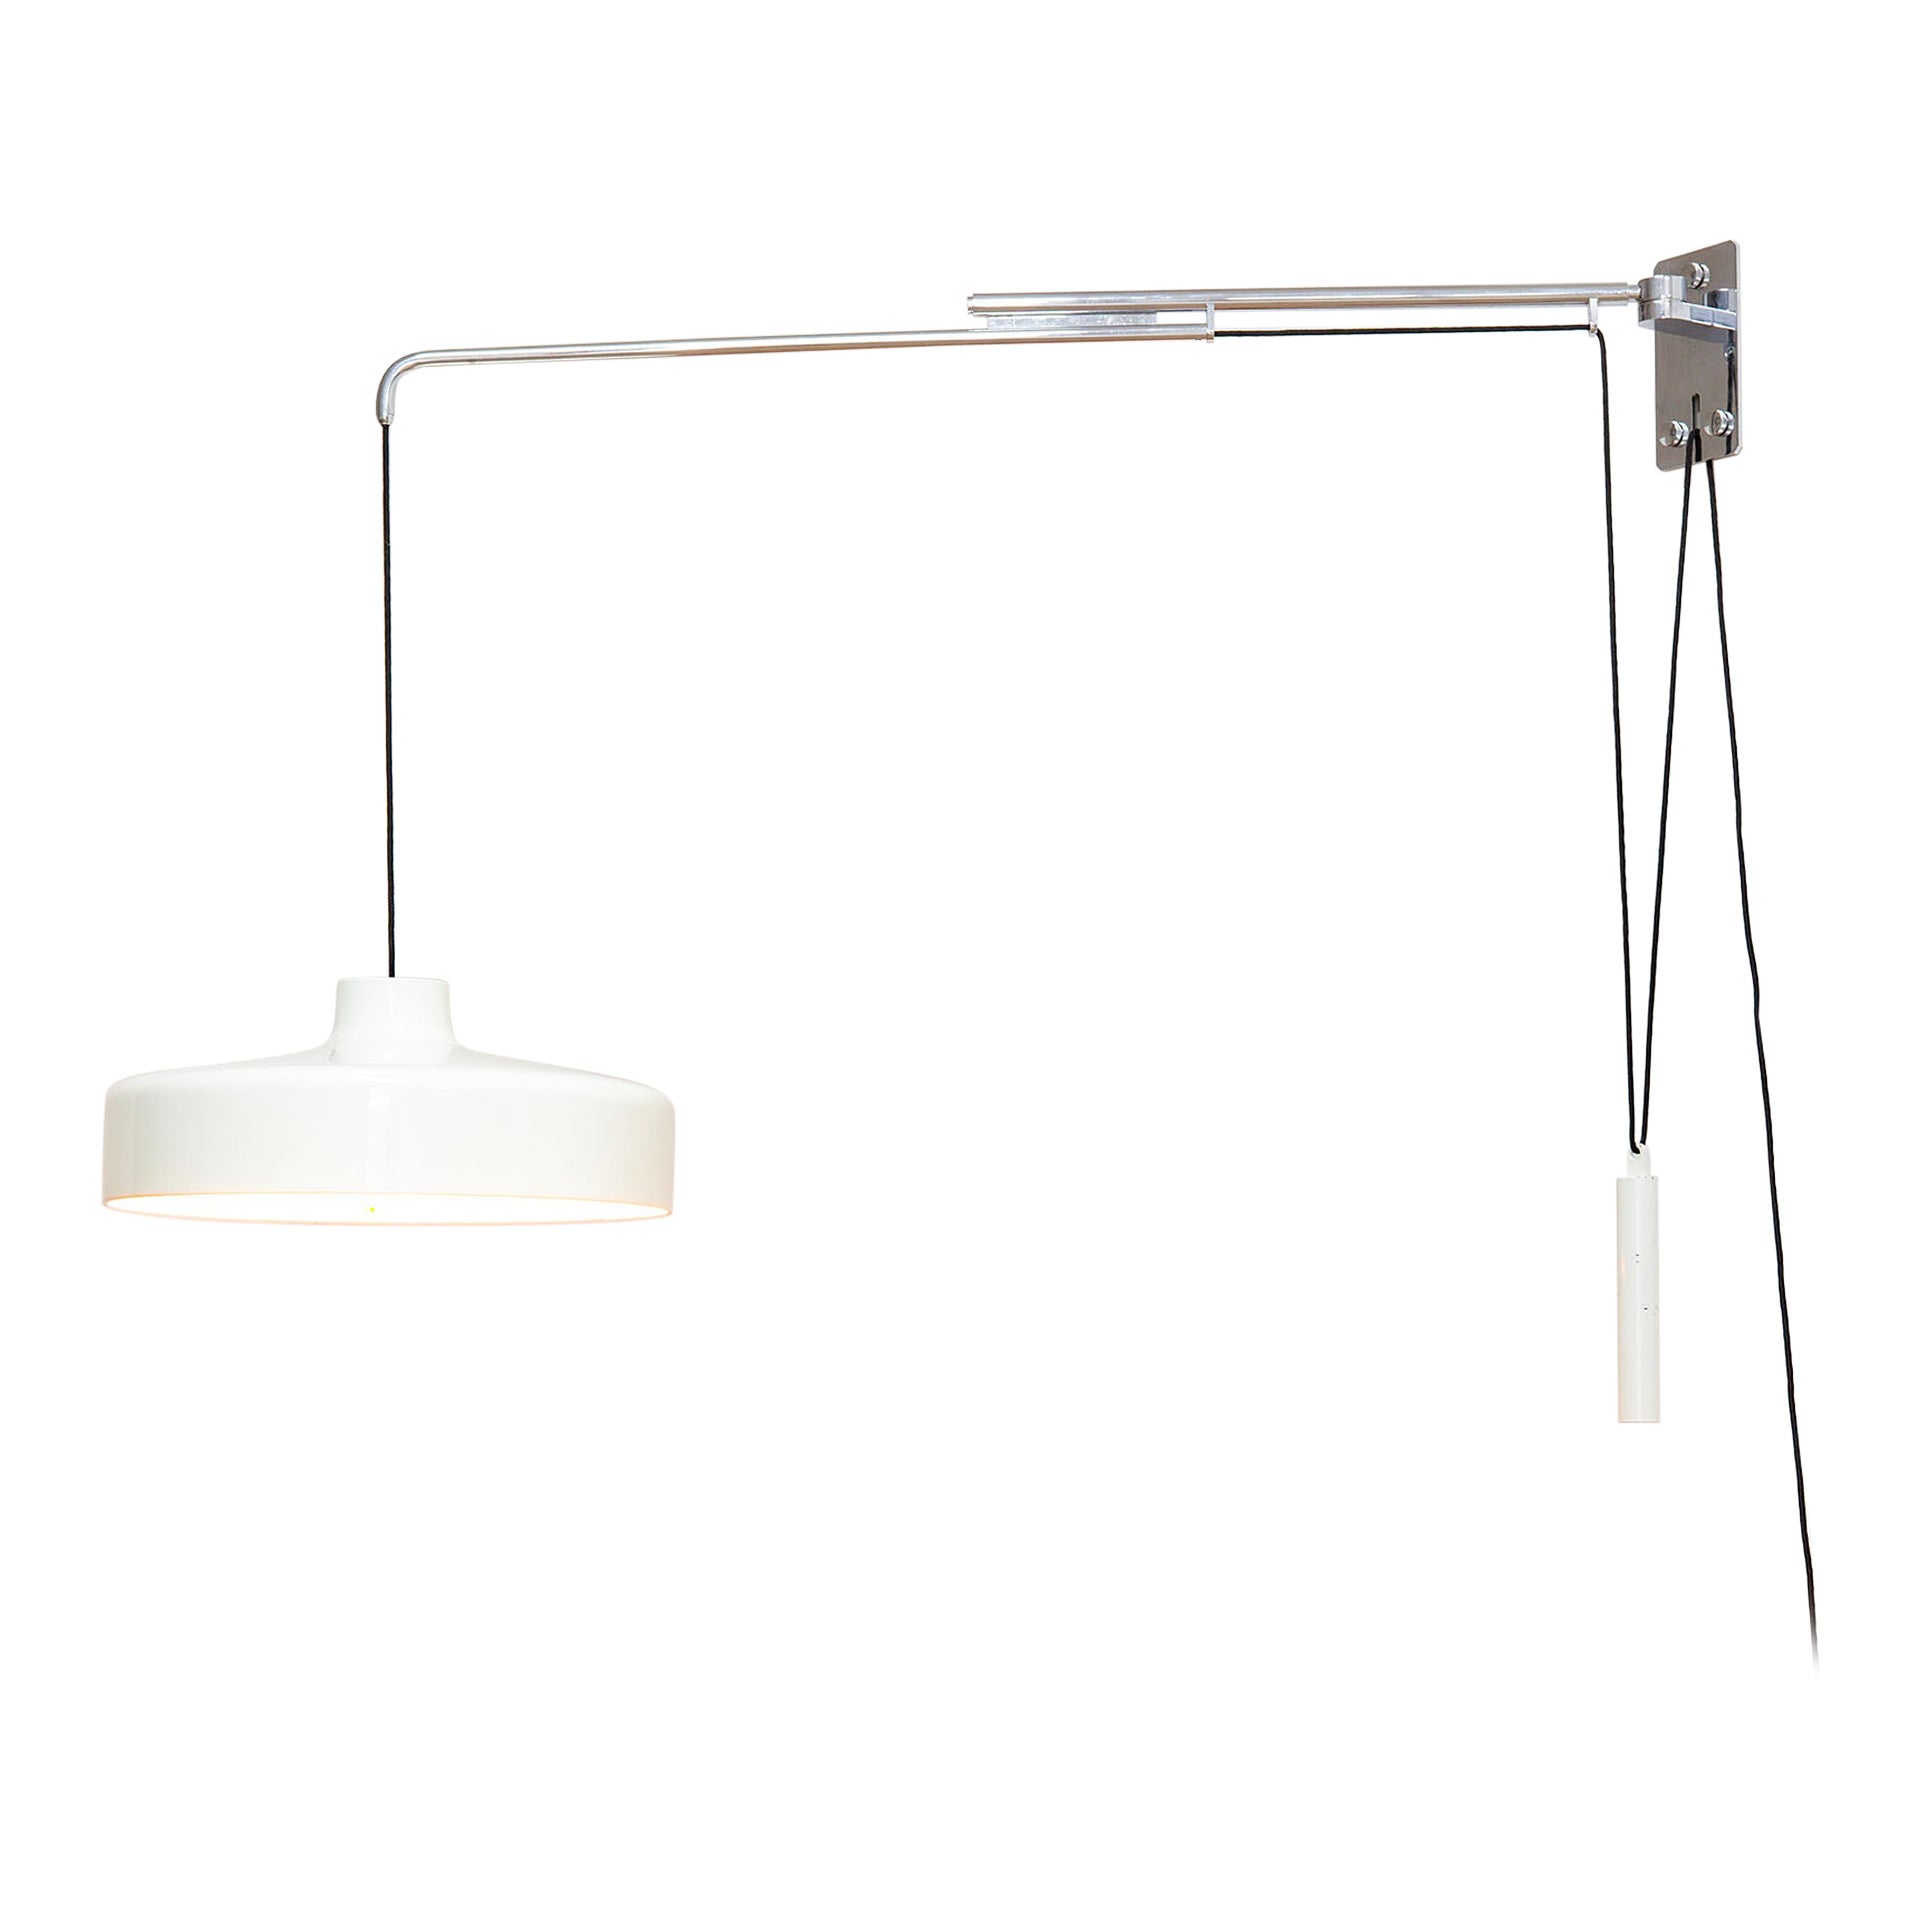 20th Century Gino Sarfatti Adjustable Wall Lamp Mod. 194 for Arteluce, 1950s For Sale